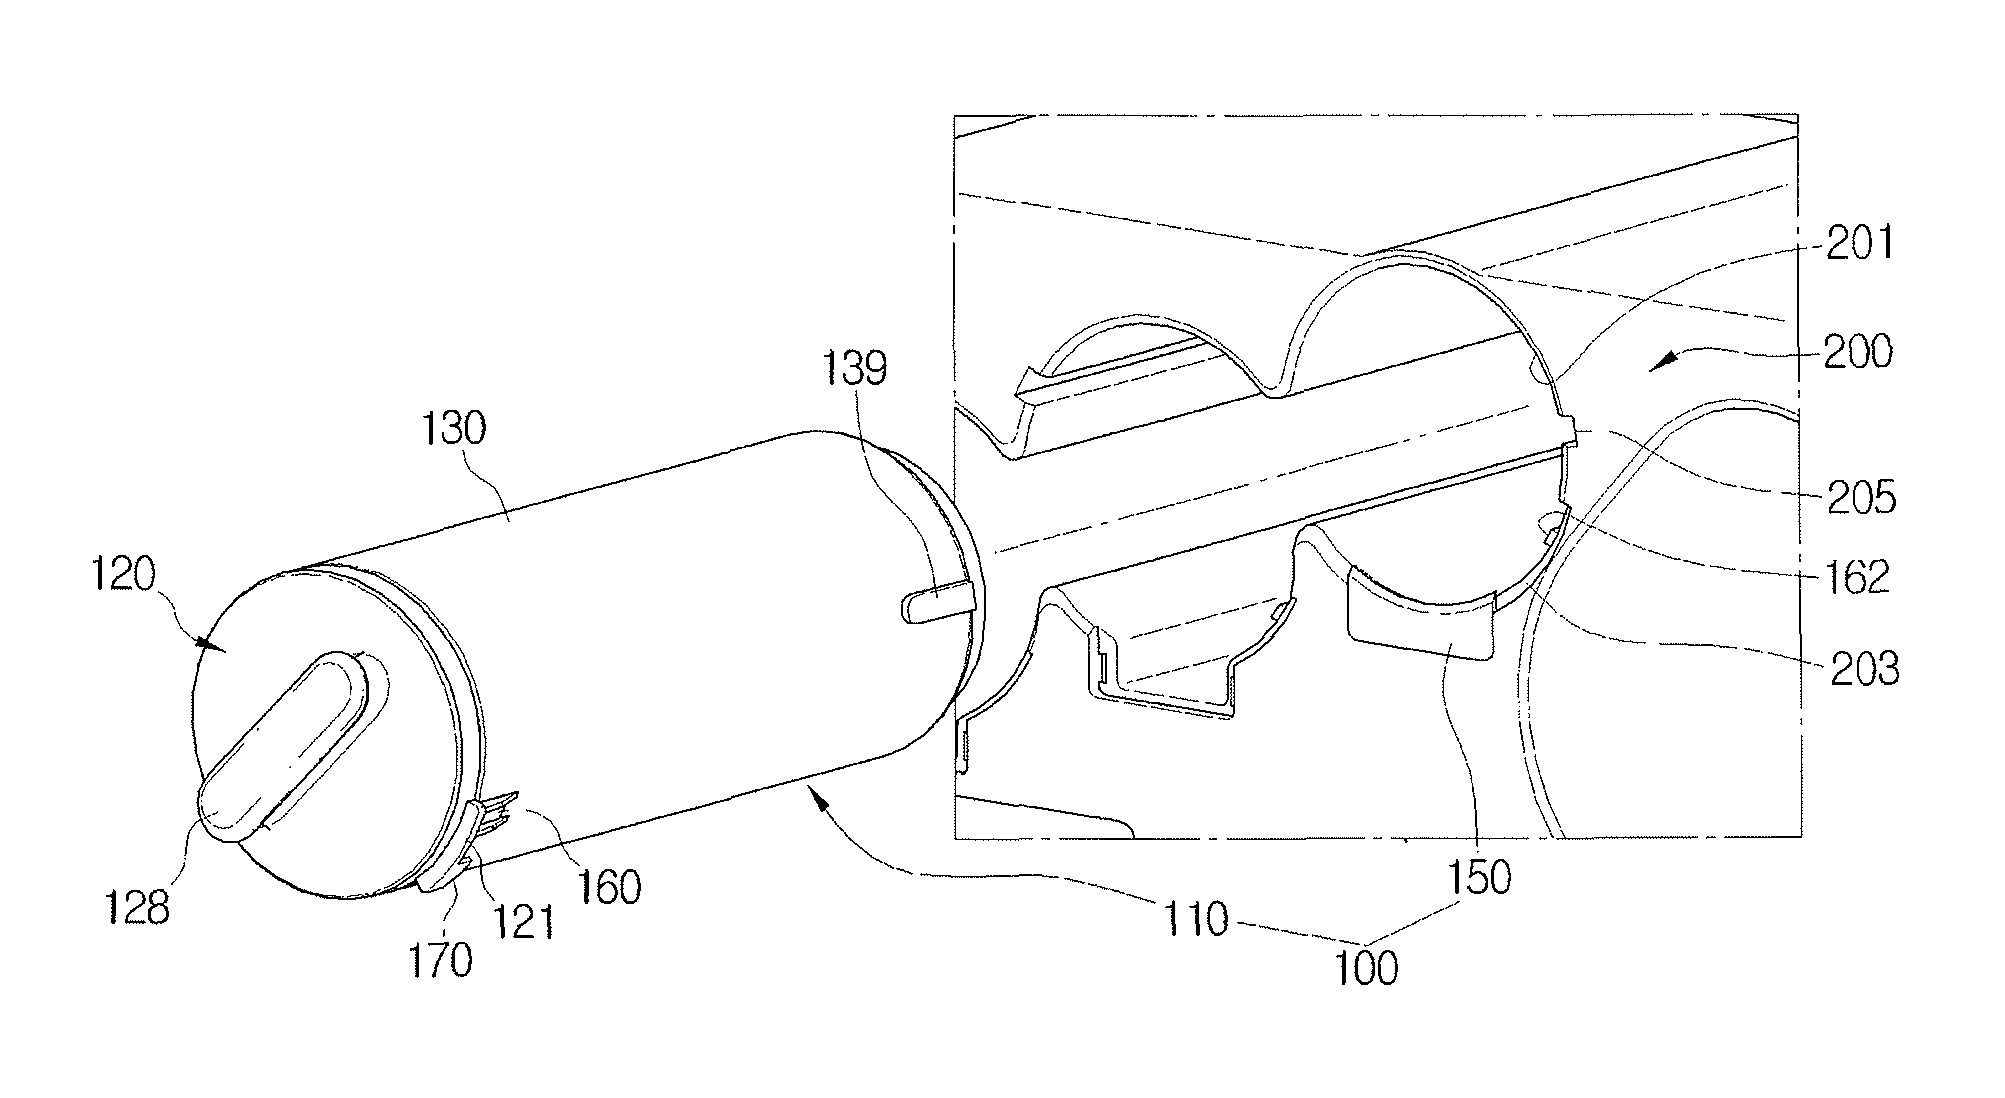 Toner cartridge locking apparatus, image forming apparatus having the same, toner cartridge, and mounting and dismounting method for a toner cartridge